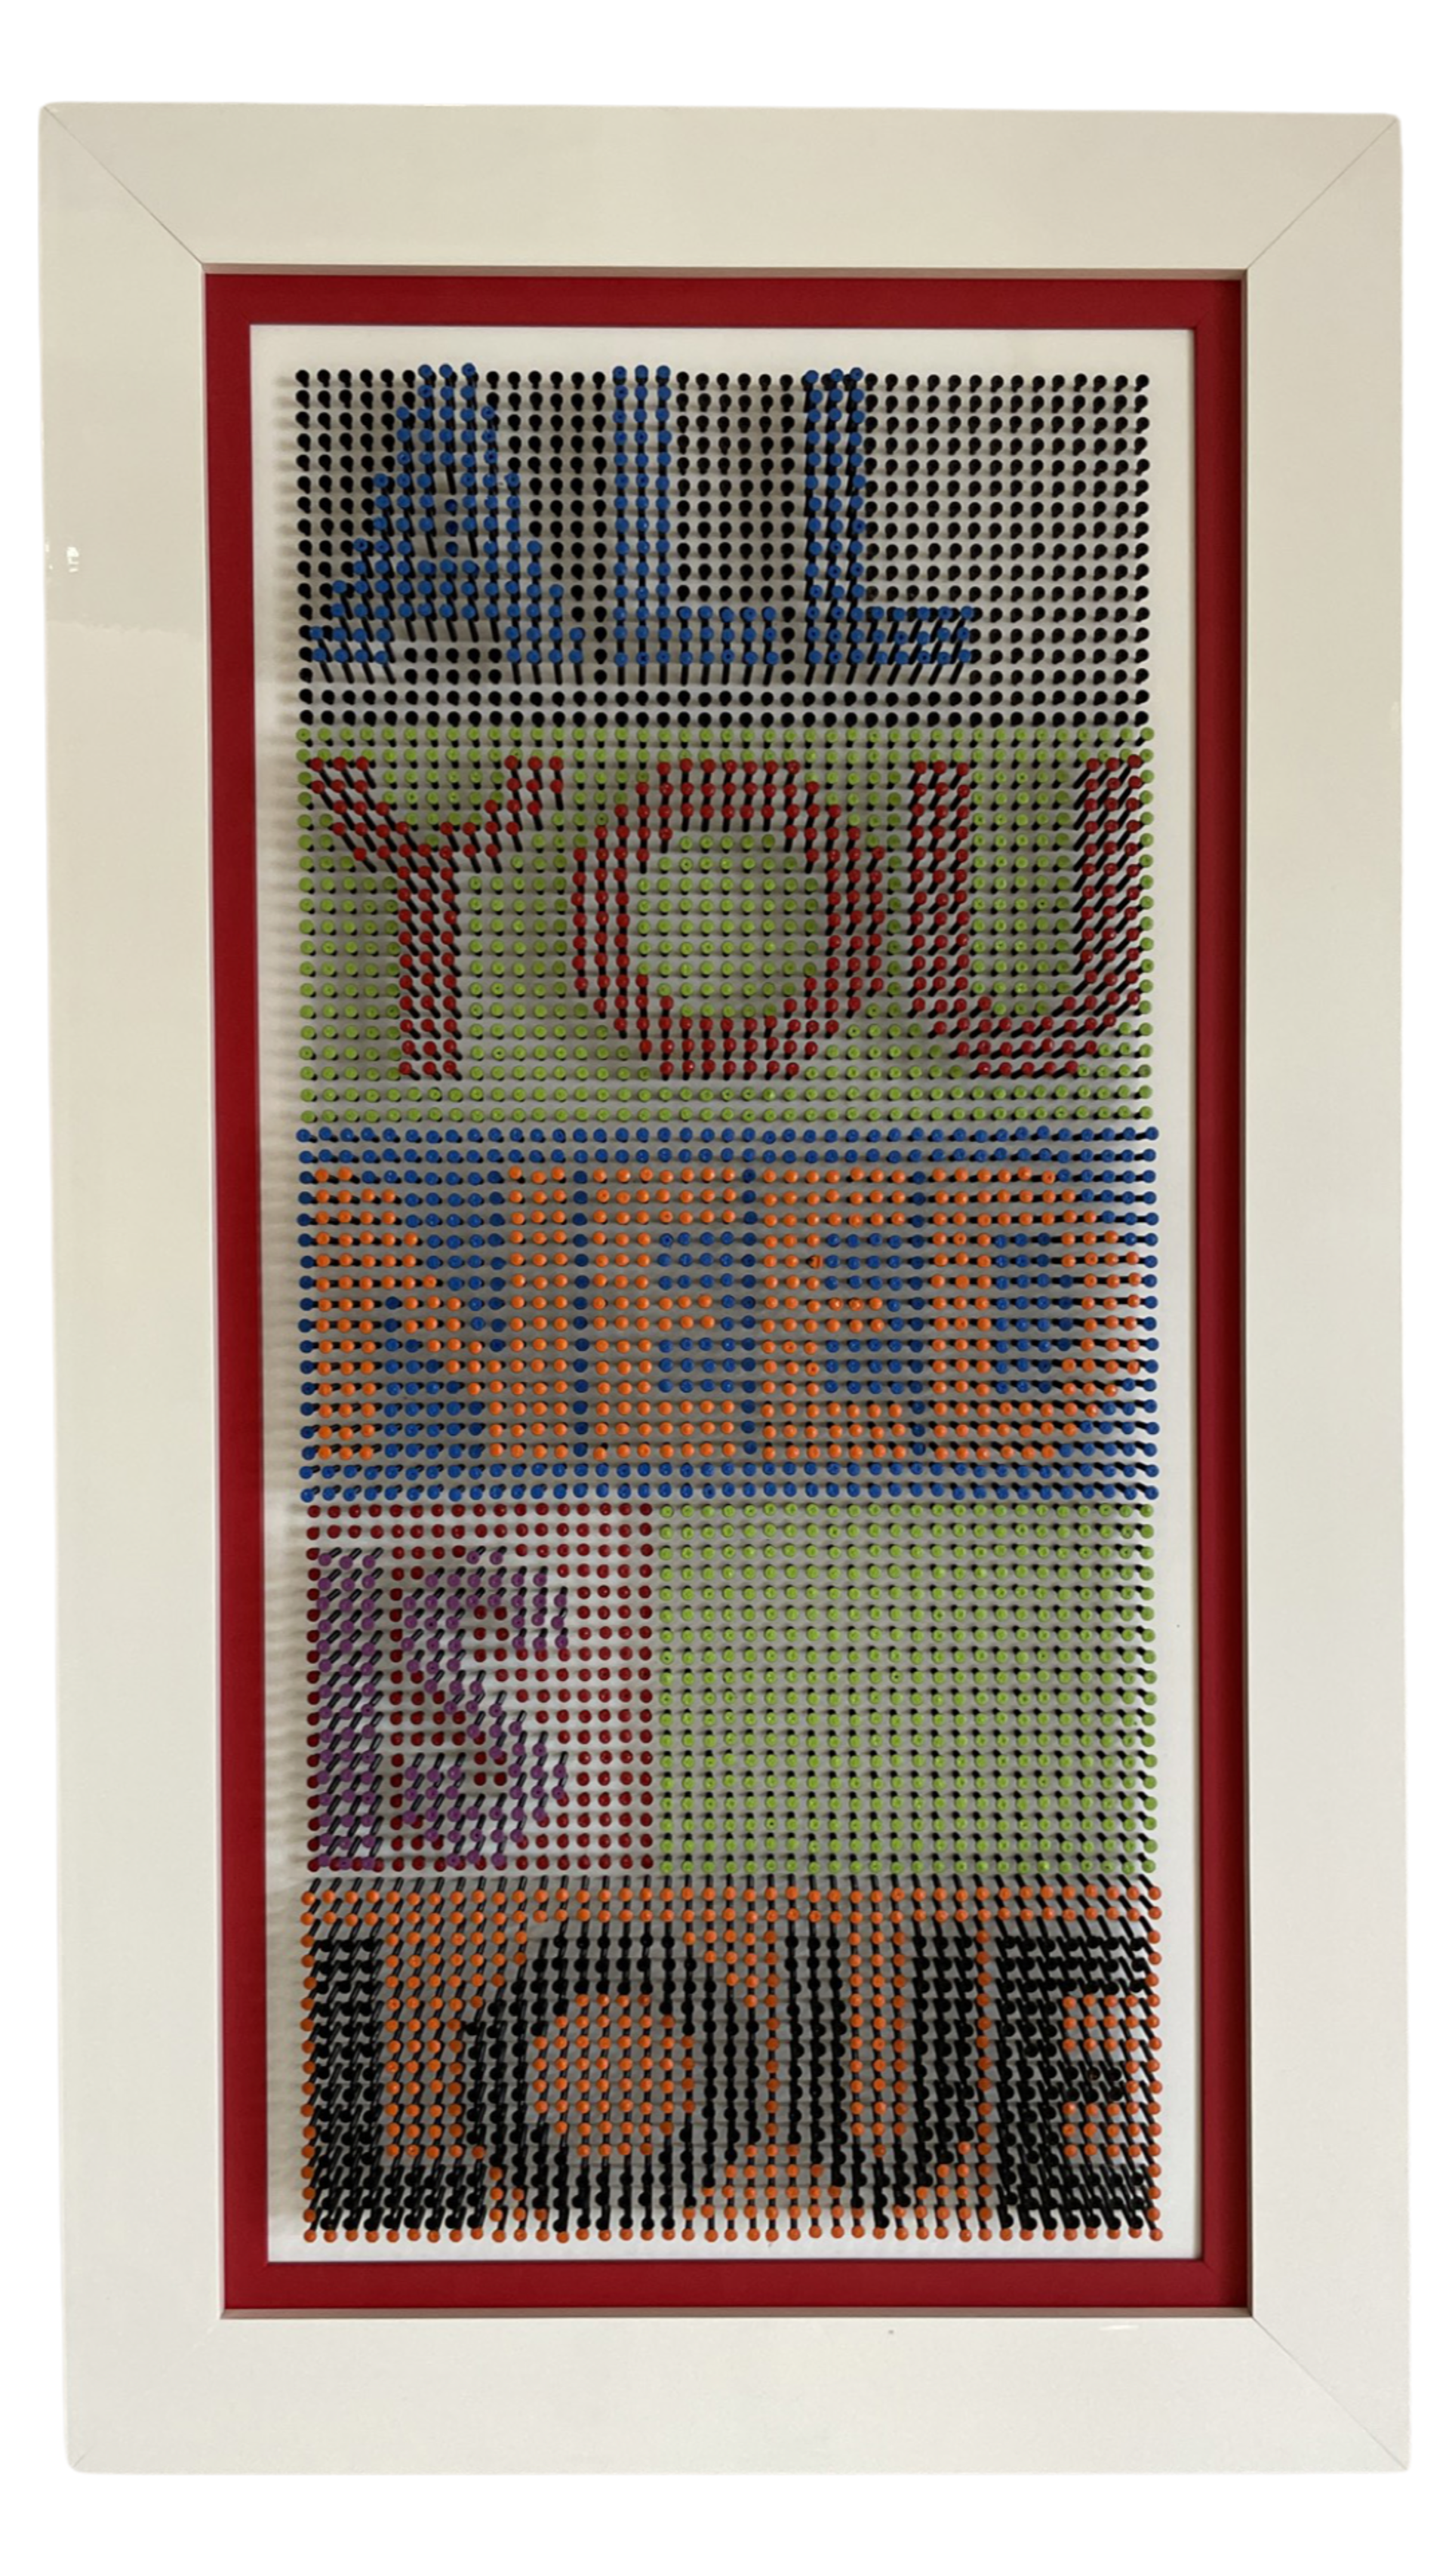 "All You Need Is Love" by Screw Art Board by Efi Mashiah